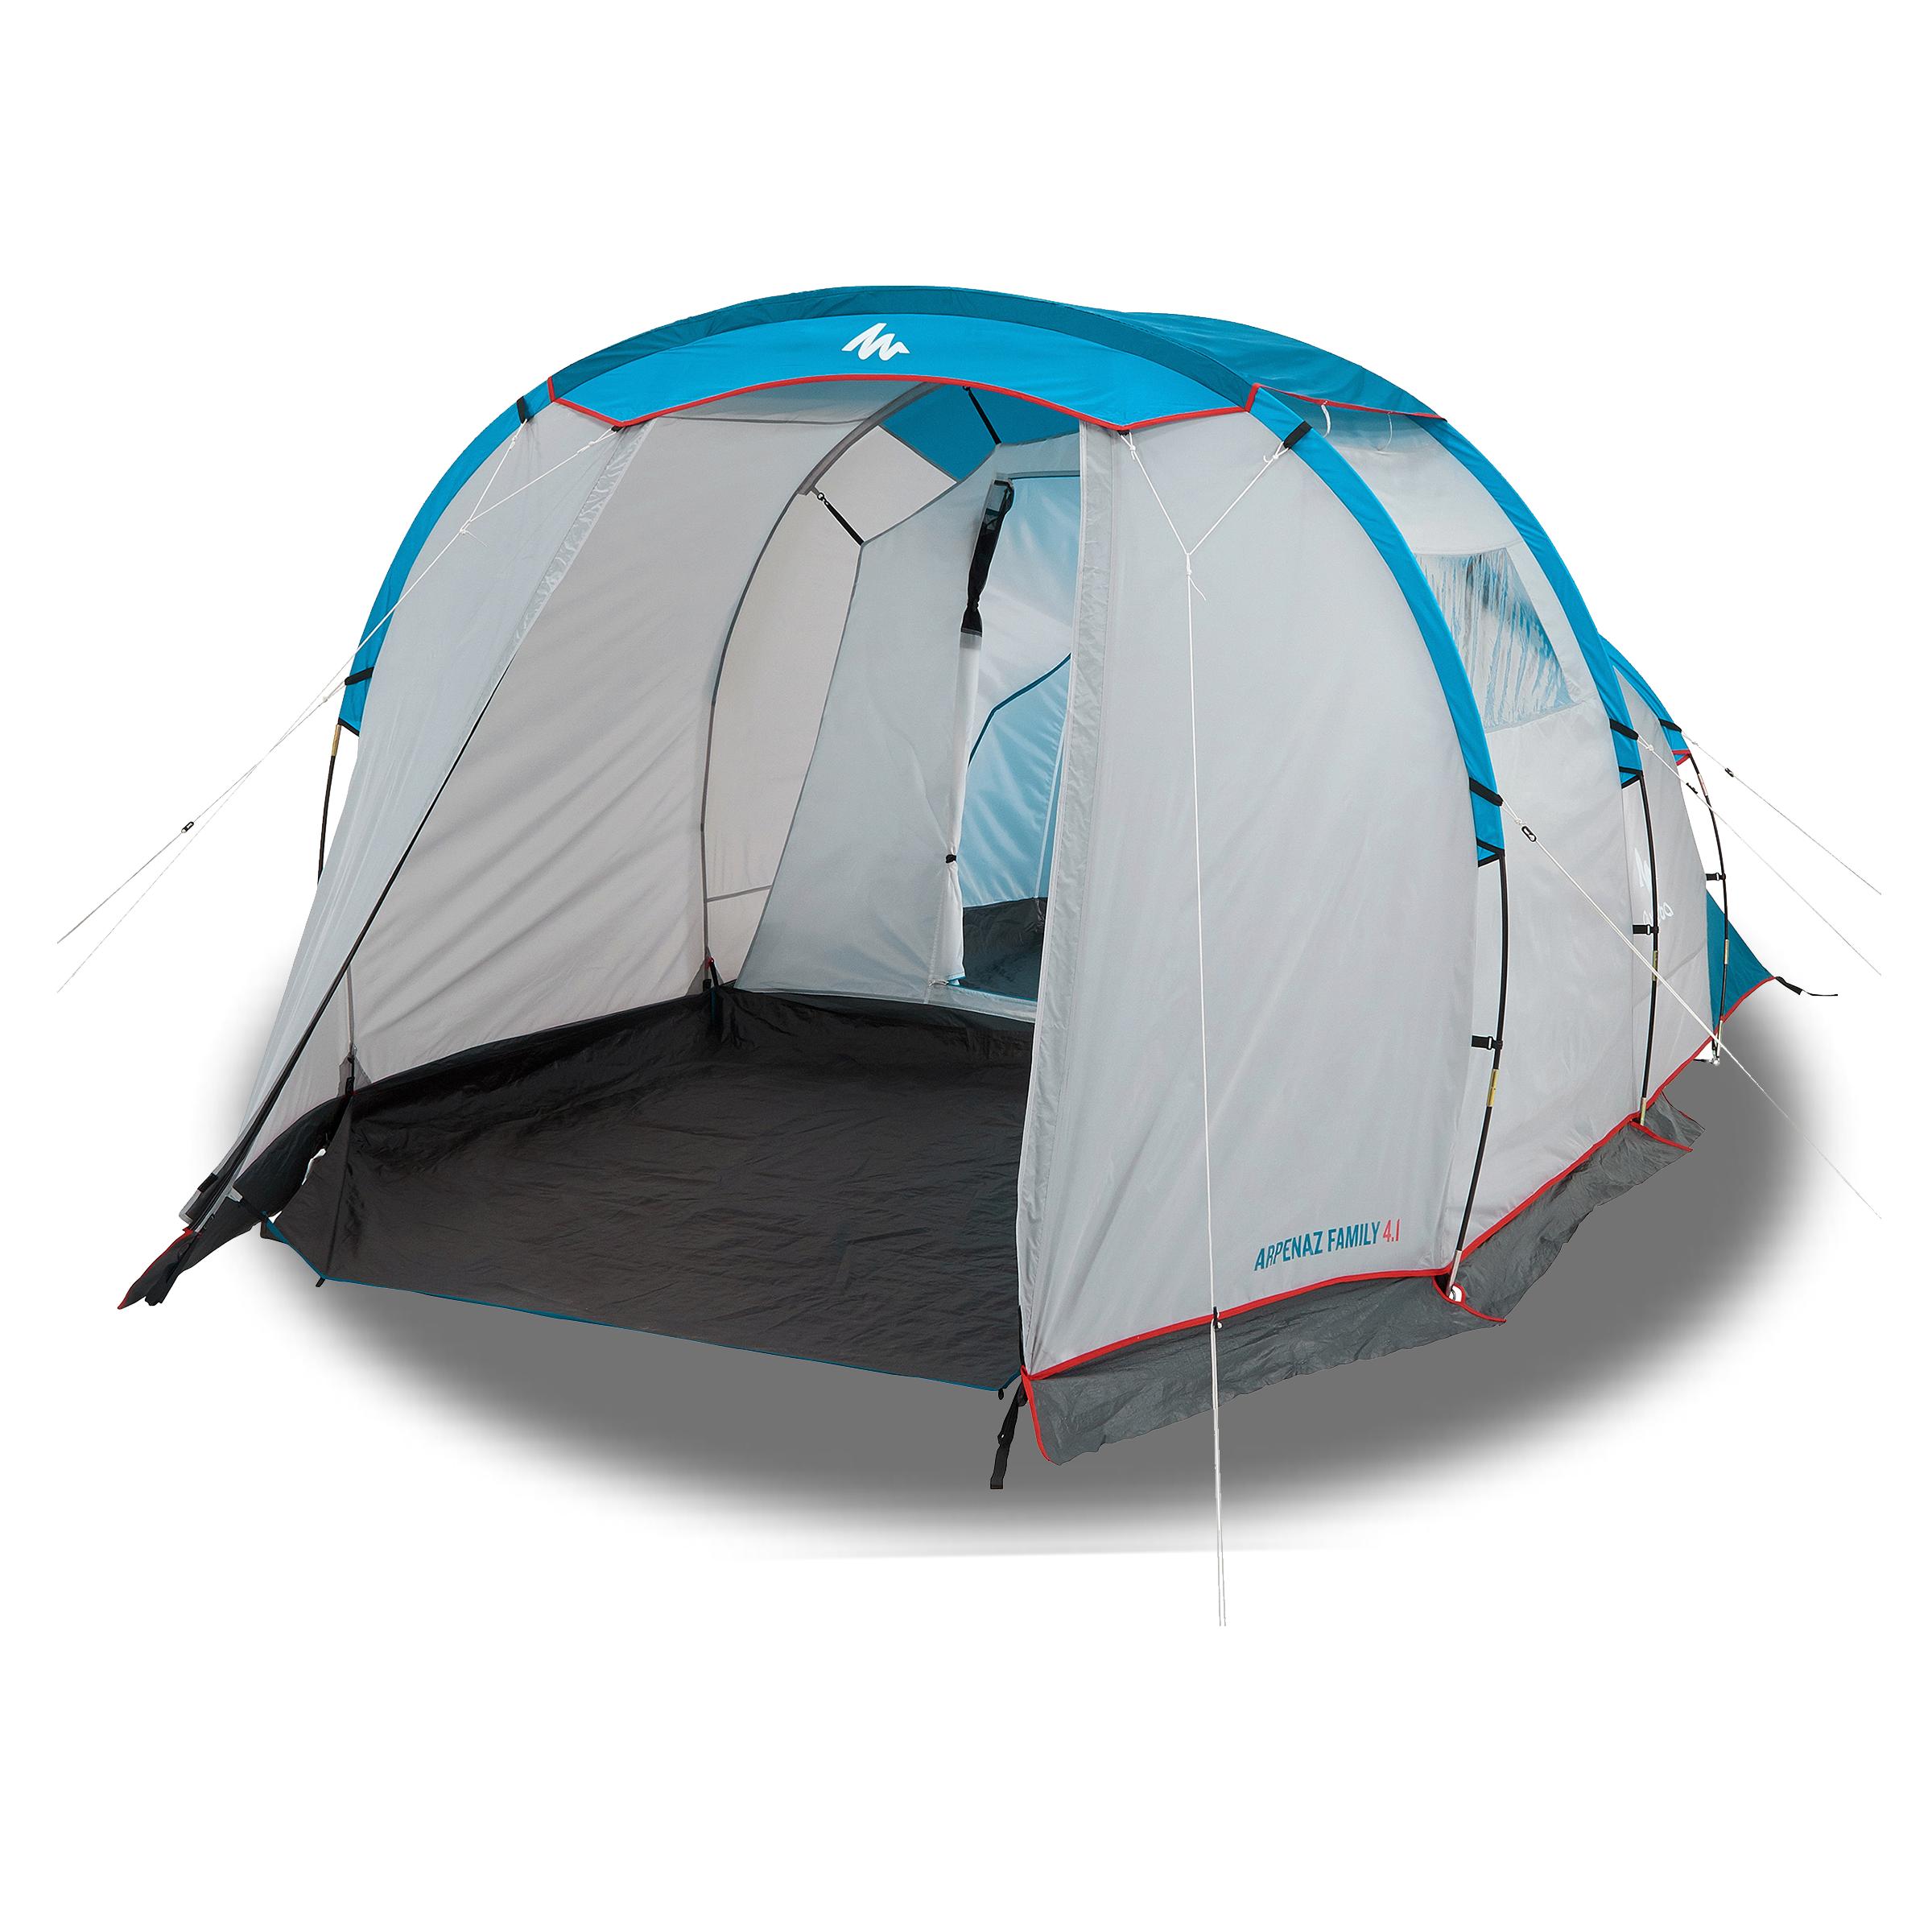 Tente Camping Couchage Randonnee Famille 4 Personnes SPT435